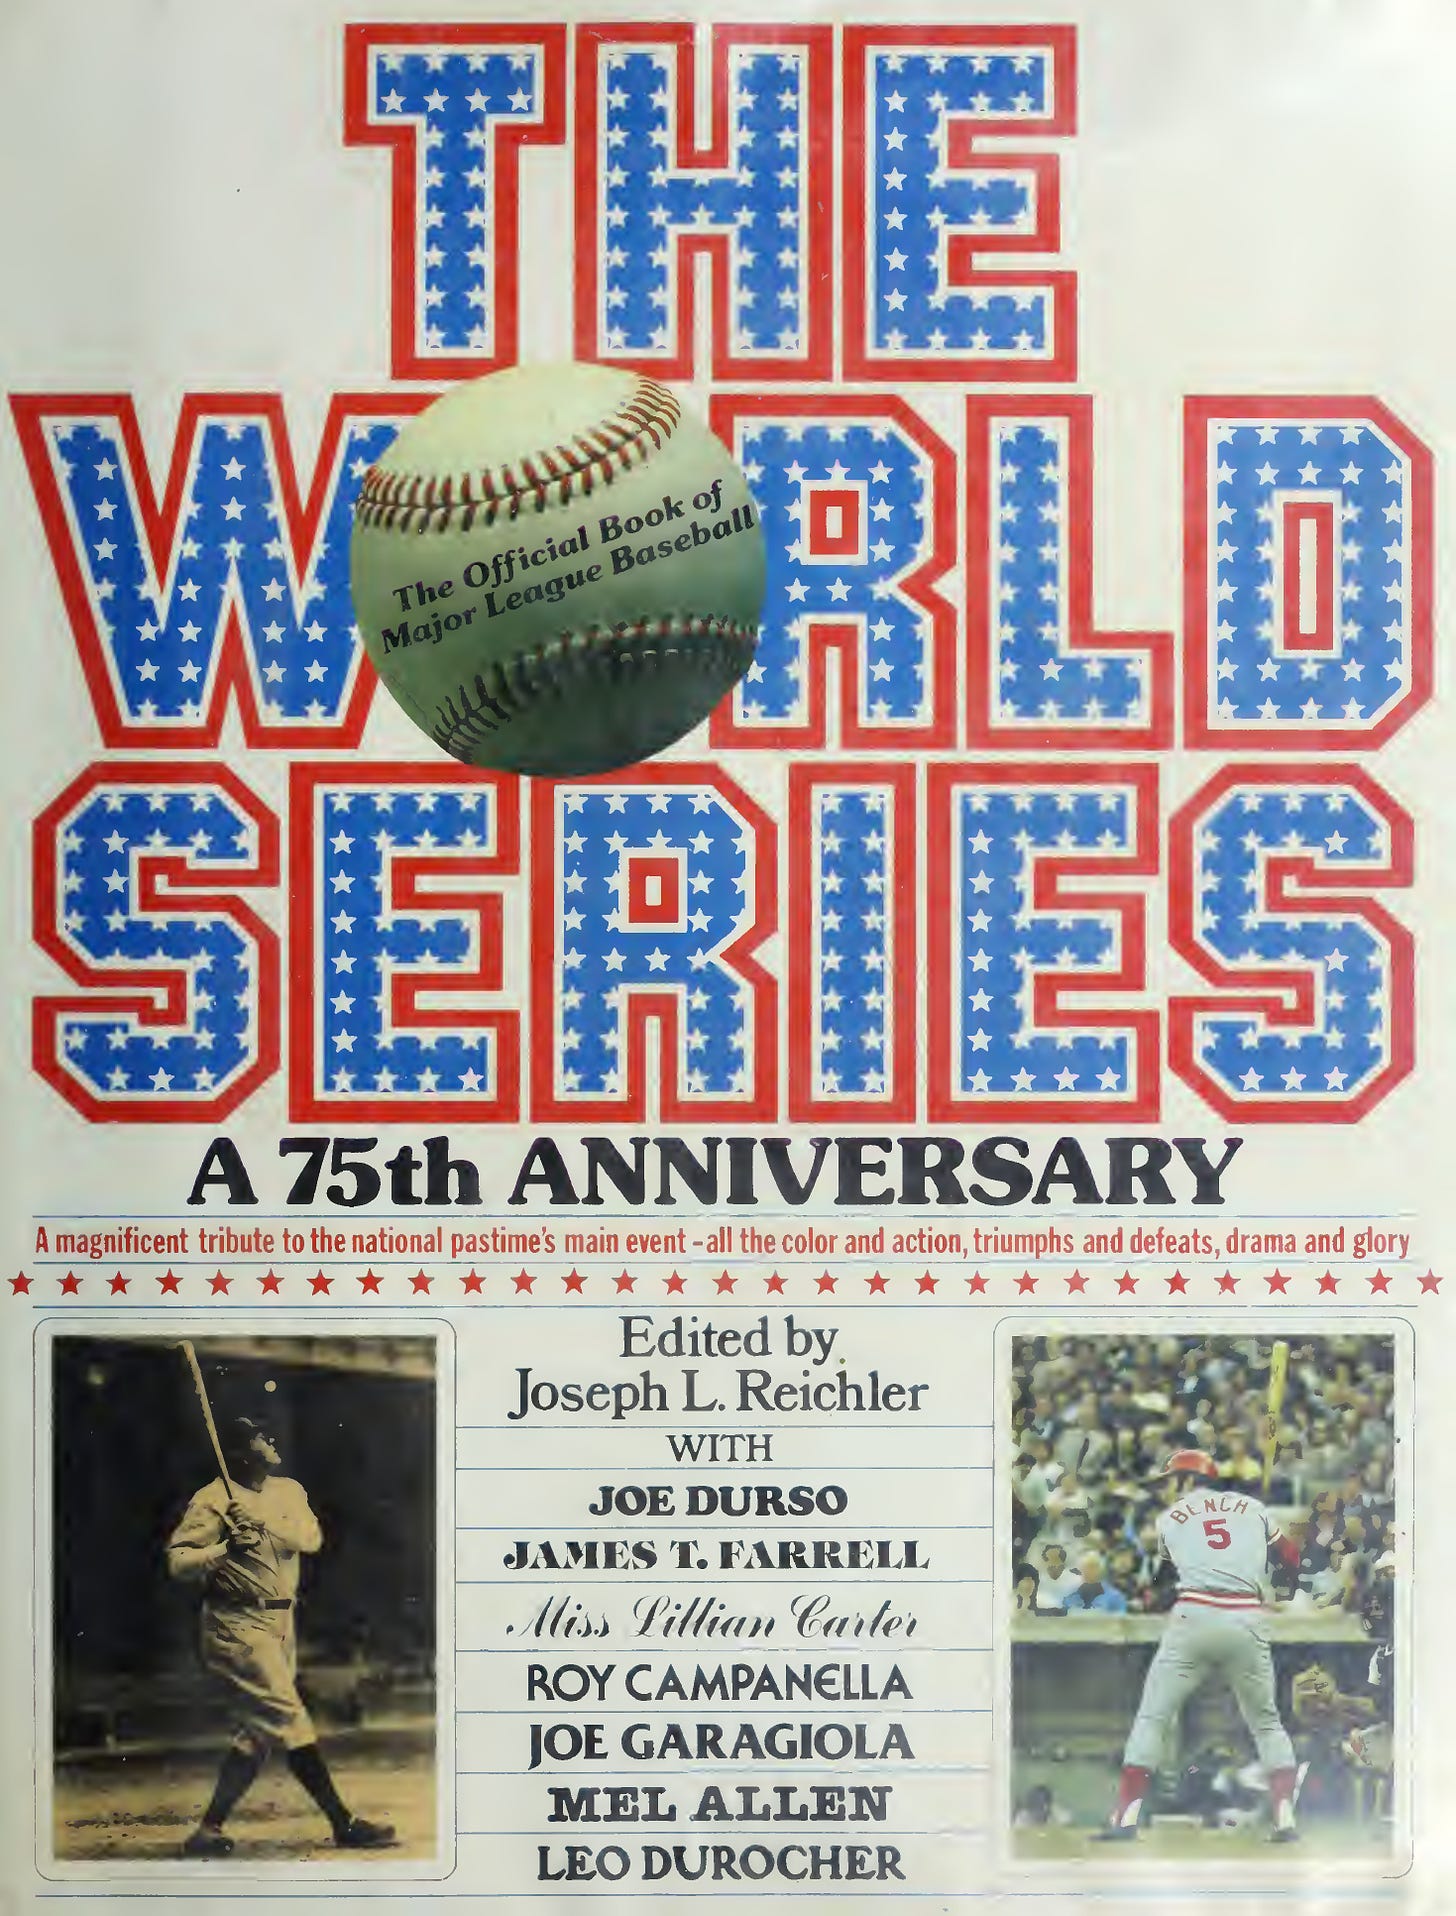 The World Series 1978